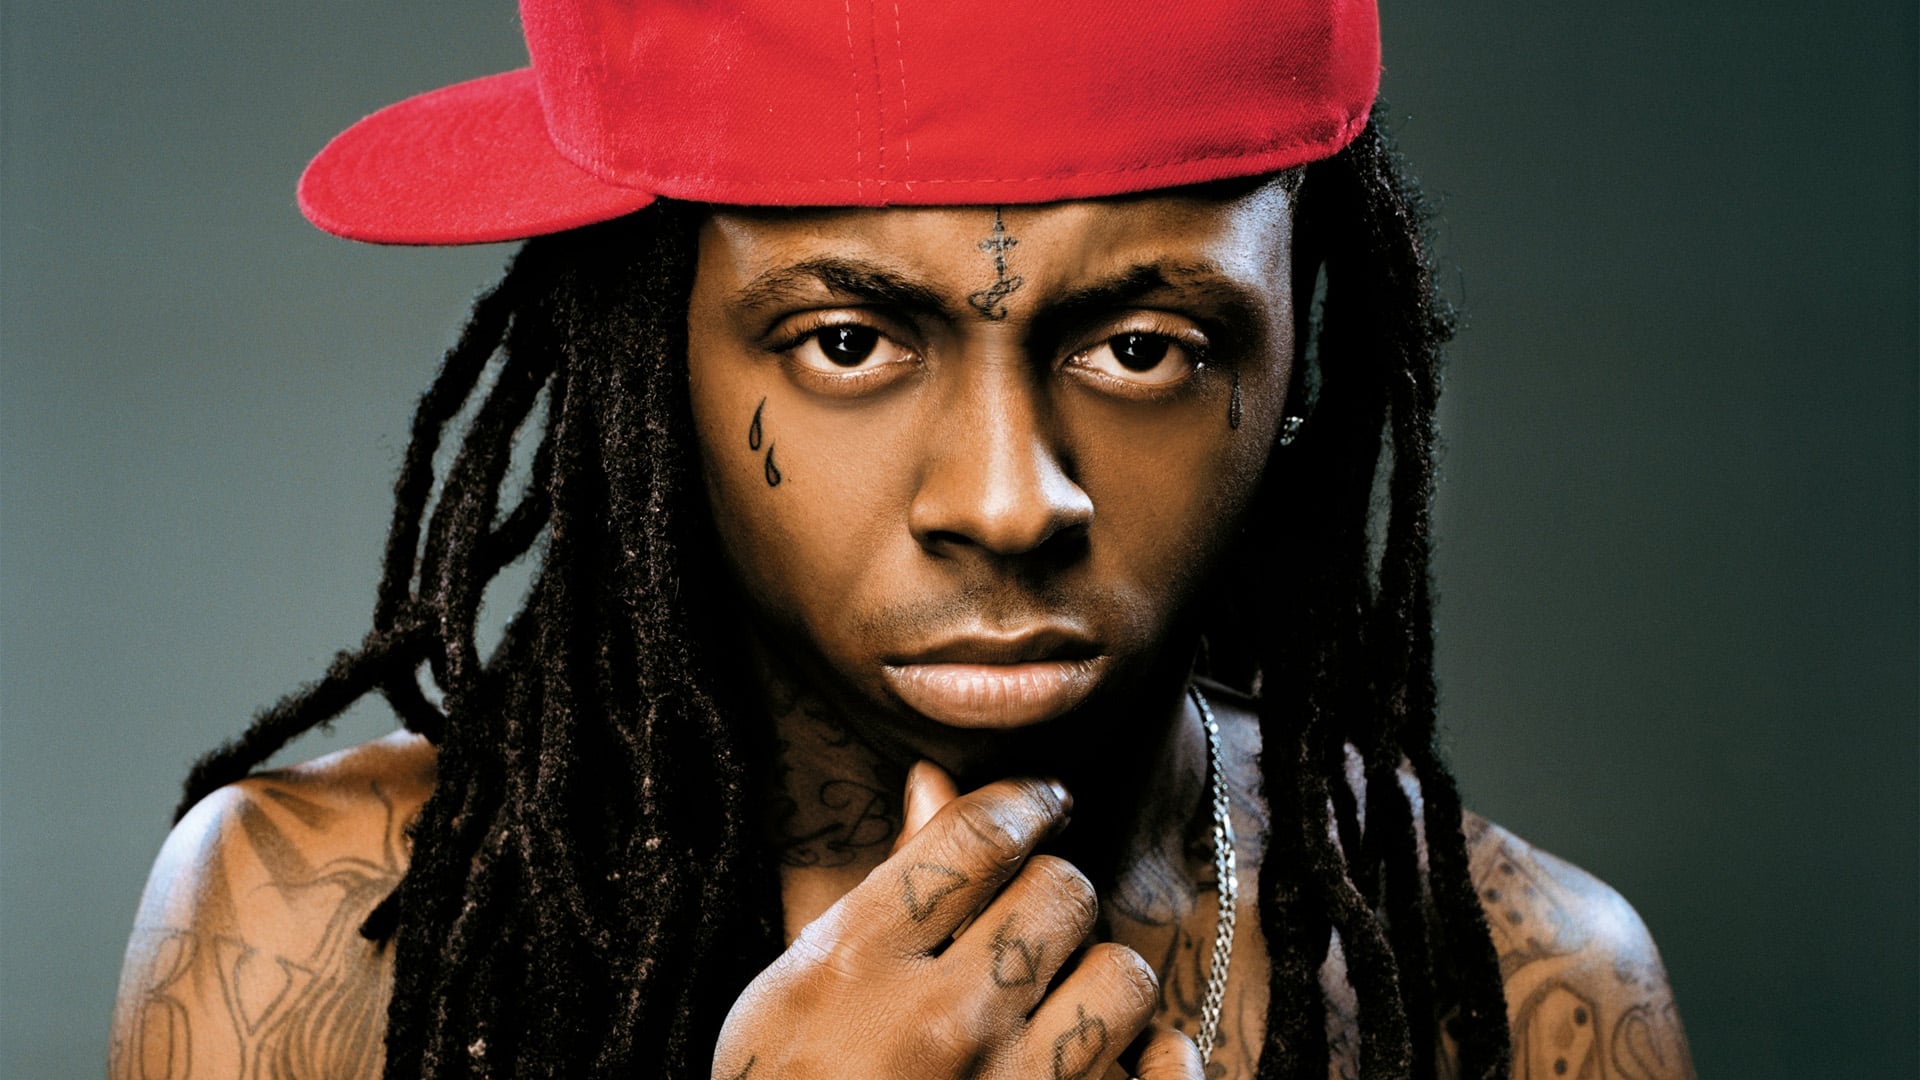 image Lil Wayne article Olympia 2017